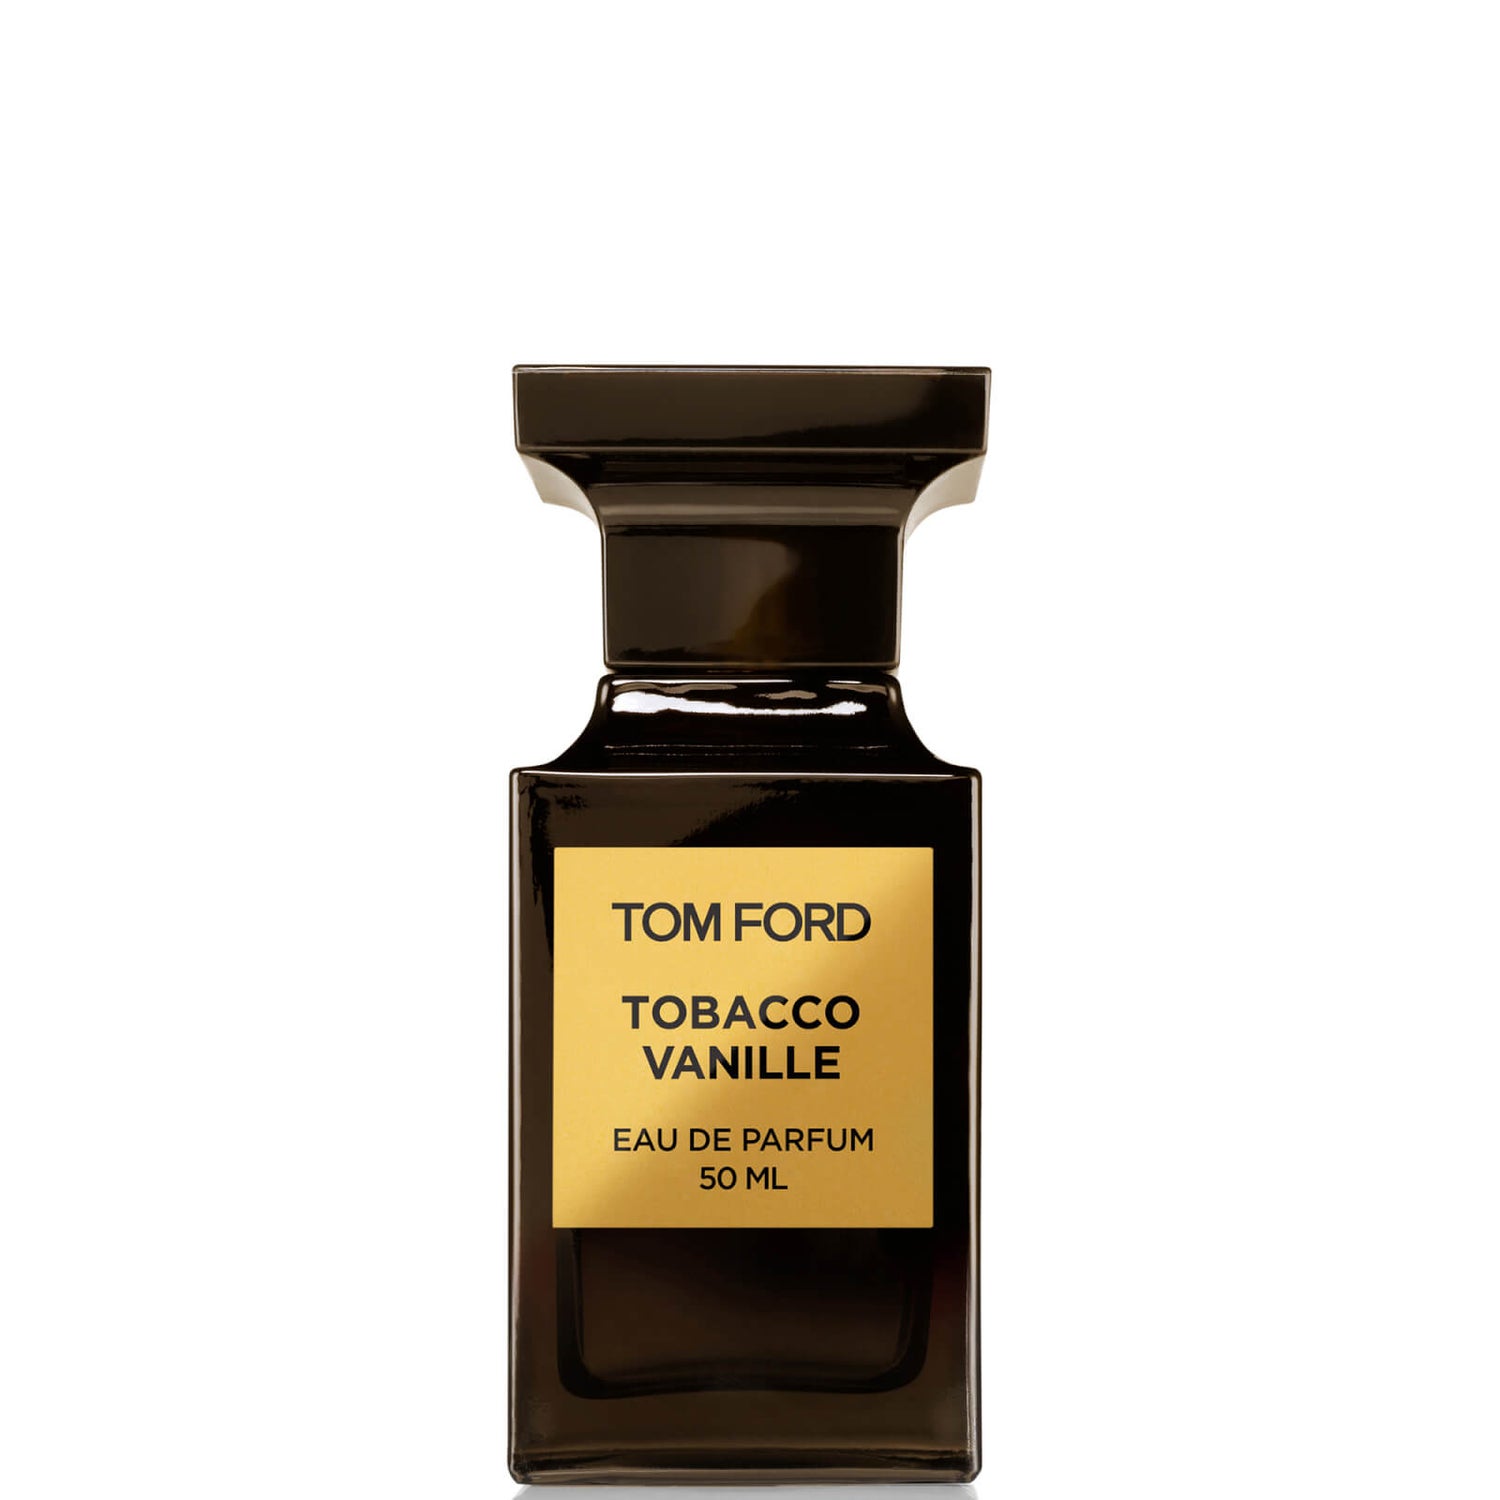 Tom Ford Tobacco Vanille Eau de Parfum Spray - 50 ml